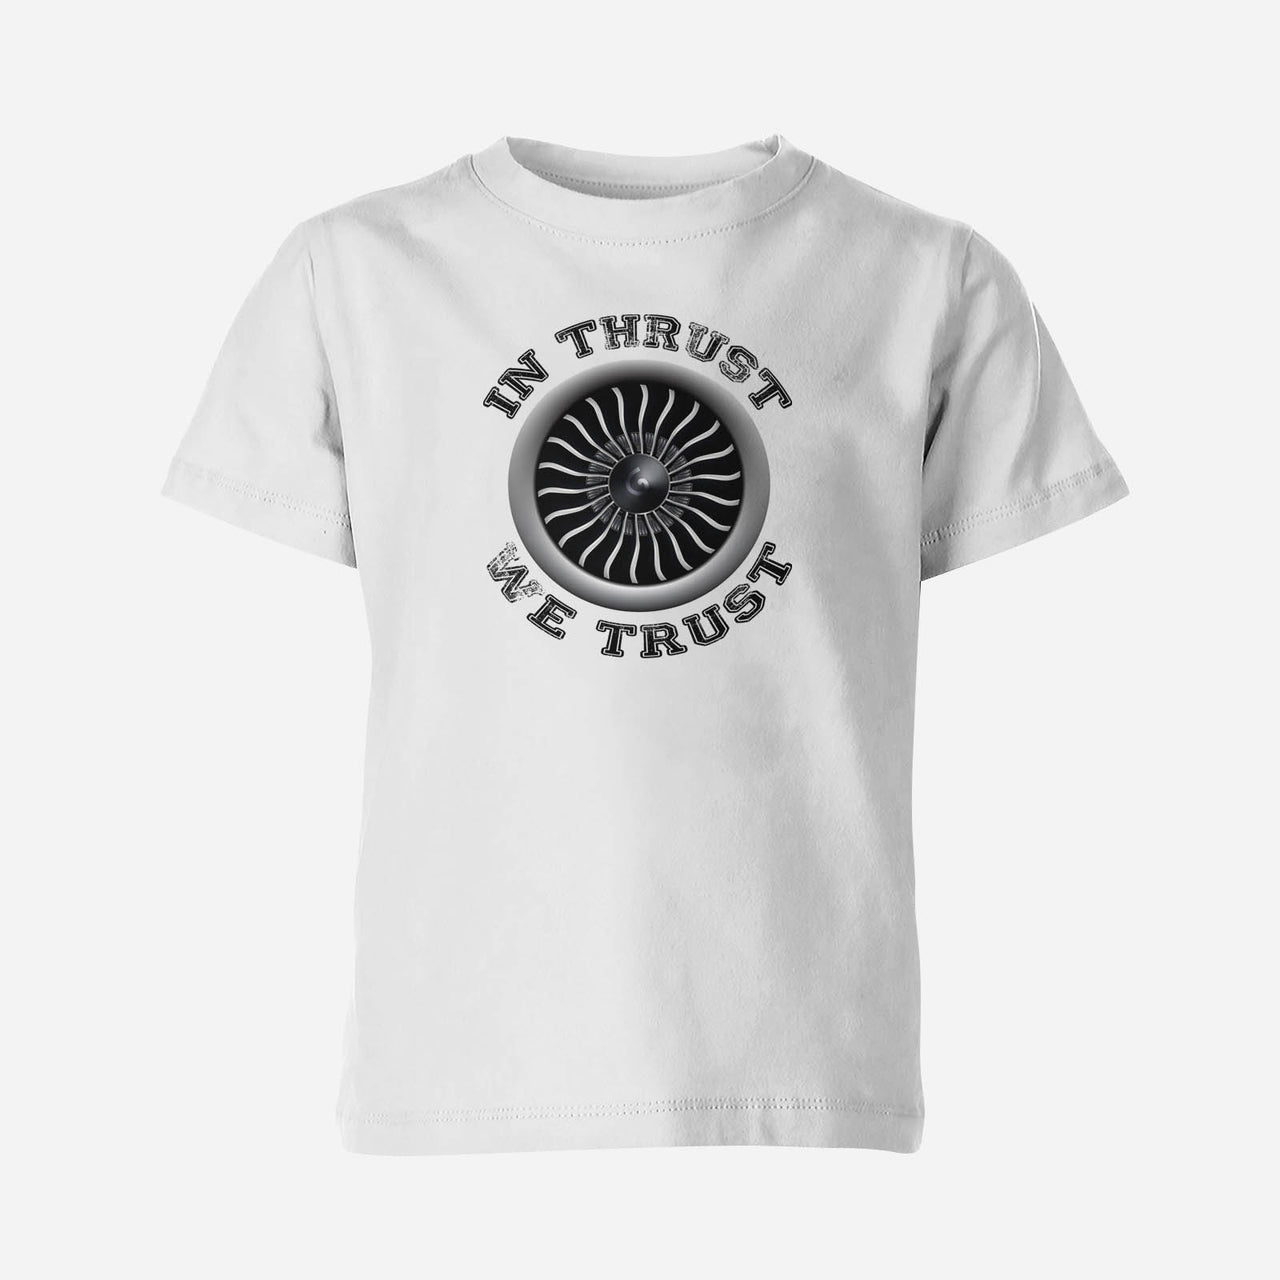 In Thrust We Trust (Vol 2) Designed Children T-Shirts